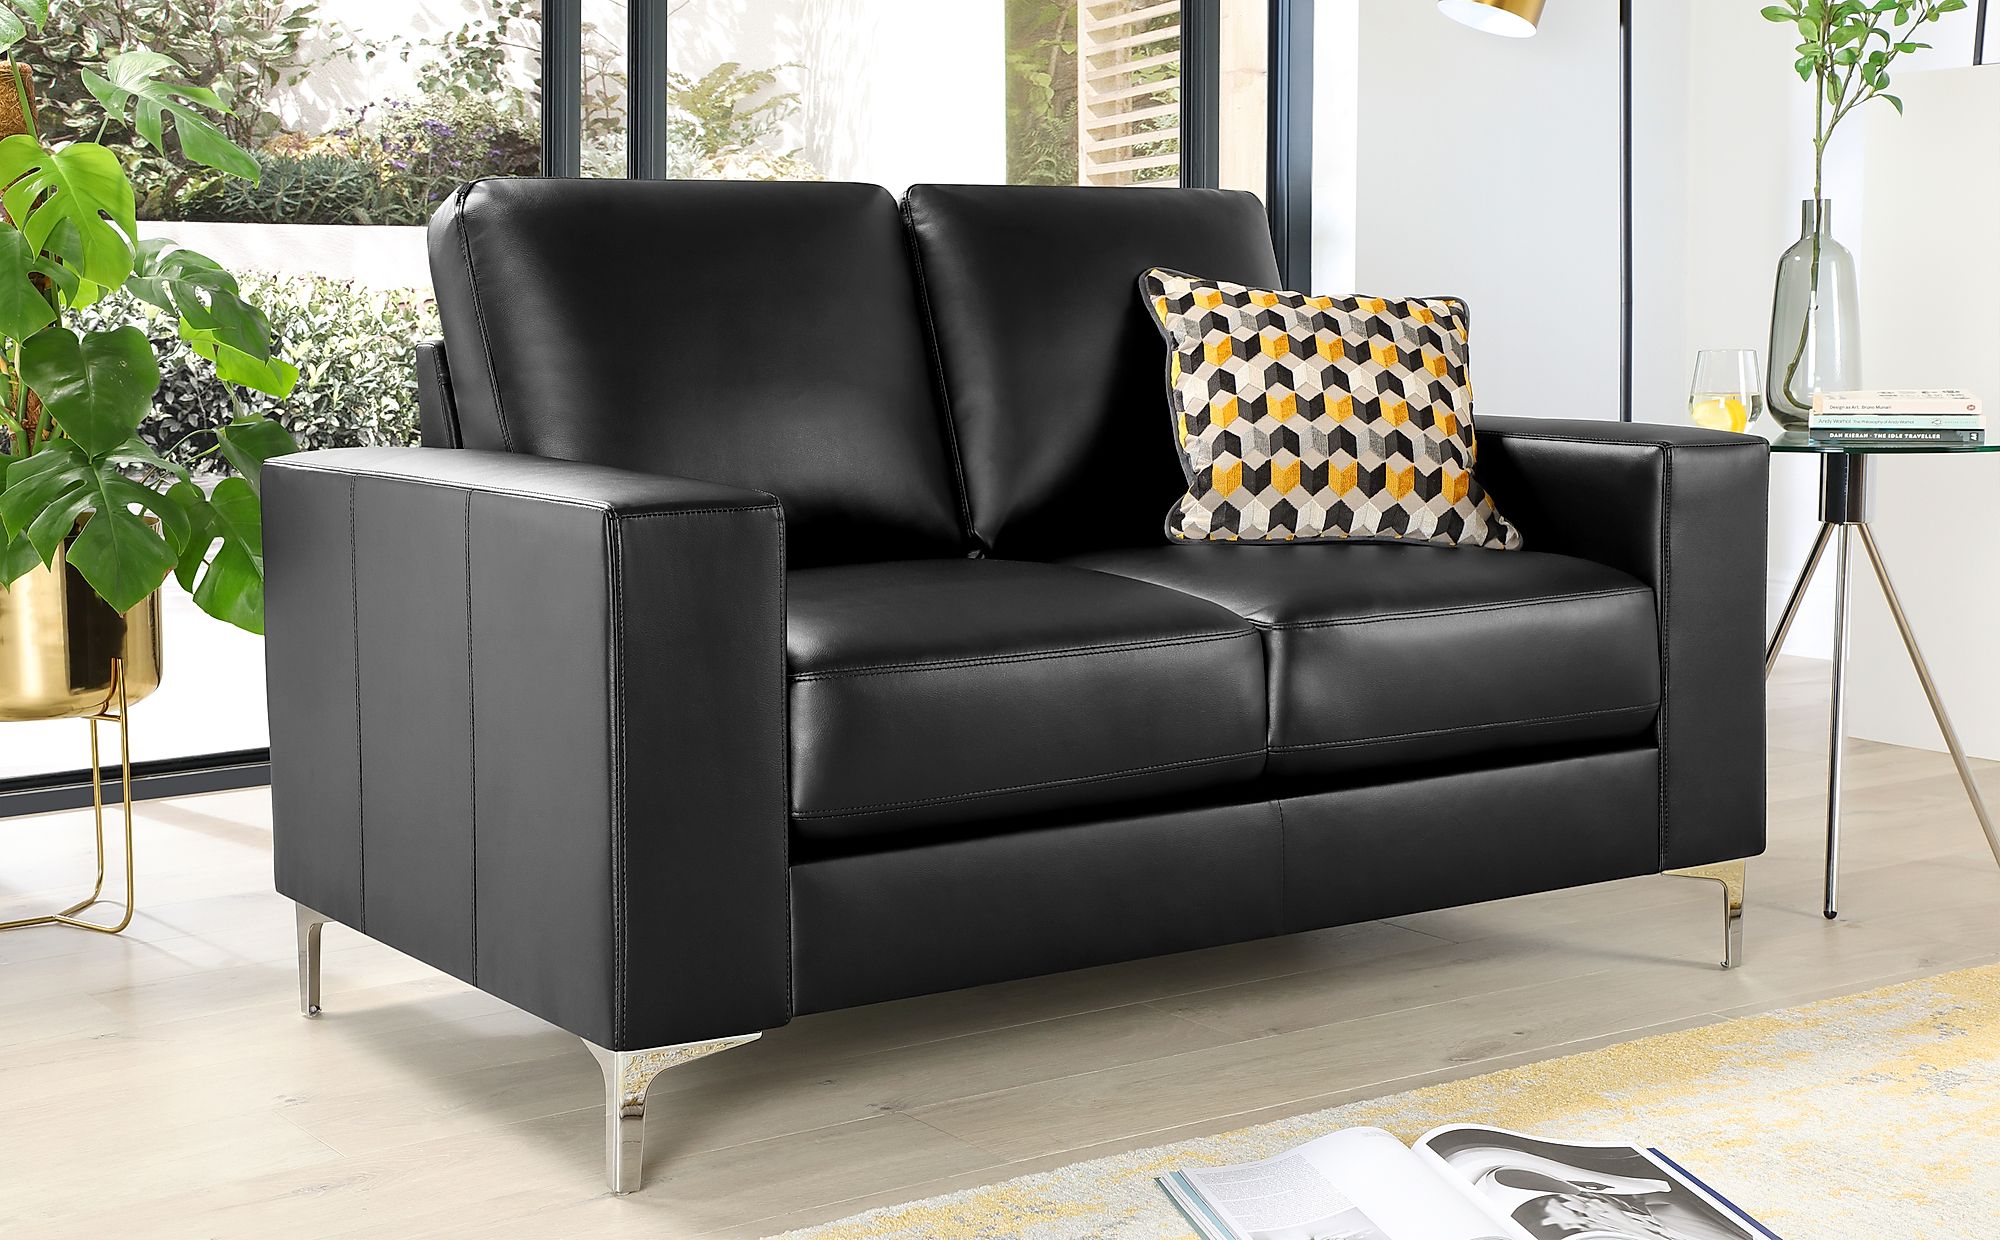 2 seater black leather sofa gumtree